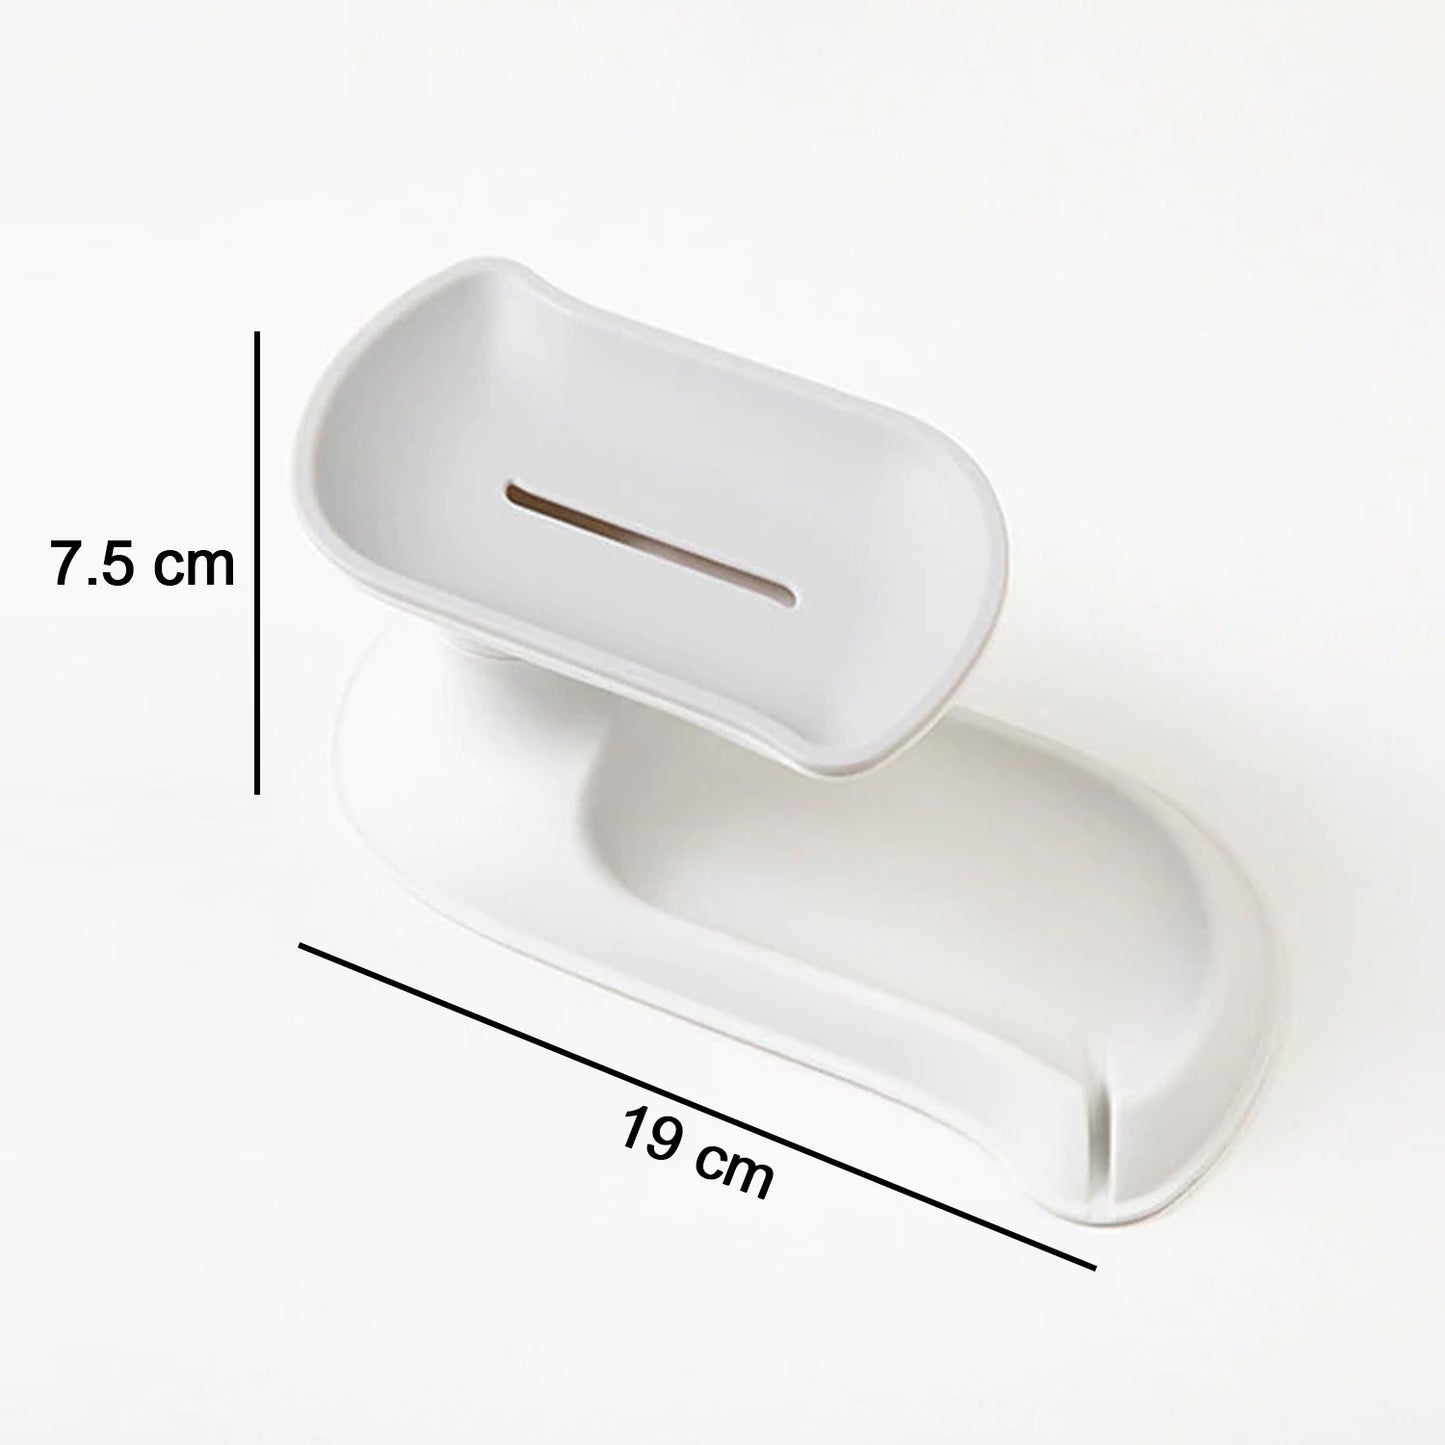 Plastic Double Layer Soap Dish Holder, Decorative Storage Holder Box for Bathroom, Kitchen 2 Pcs Pack